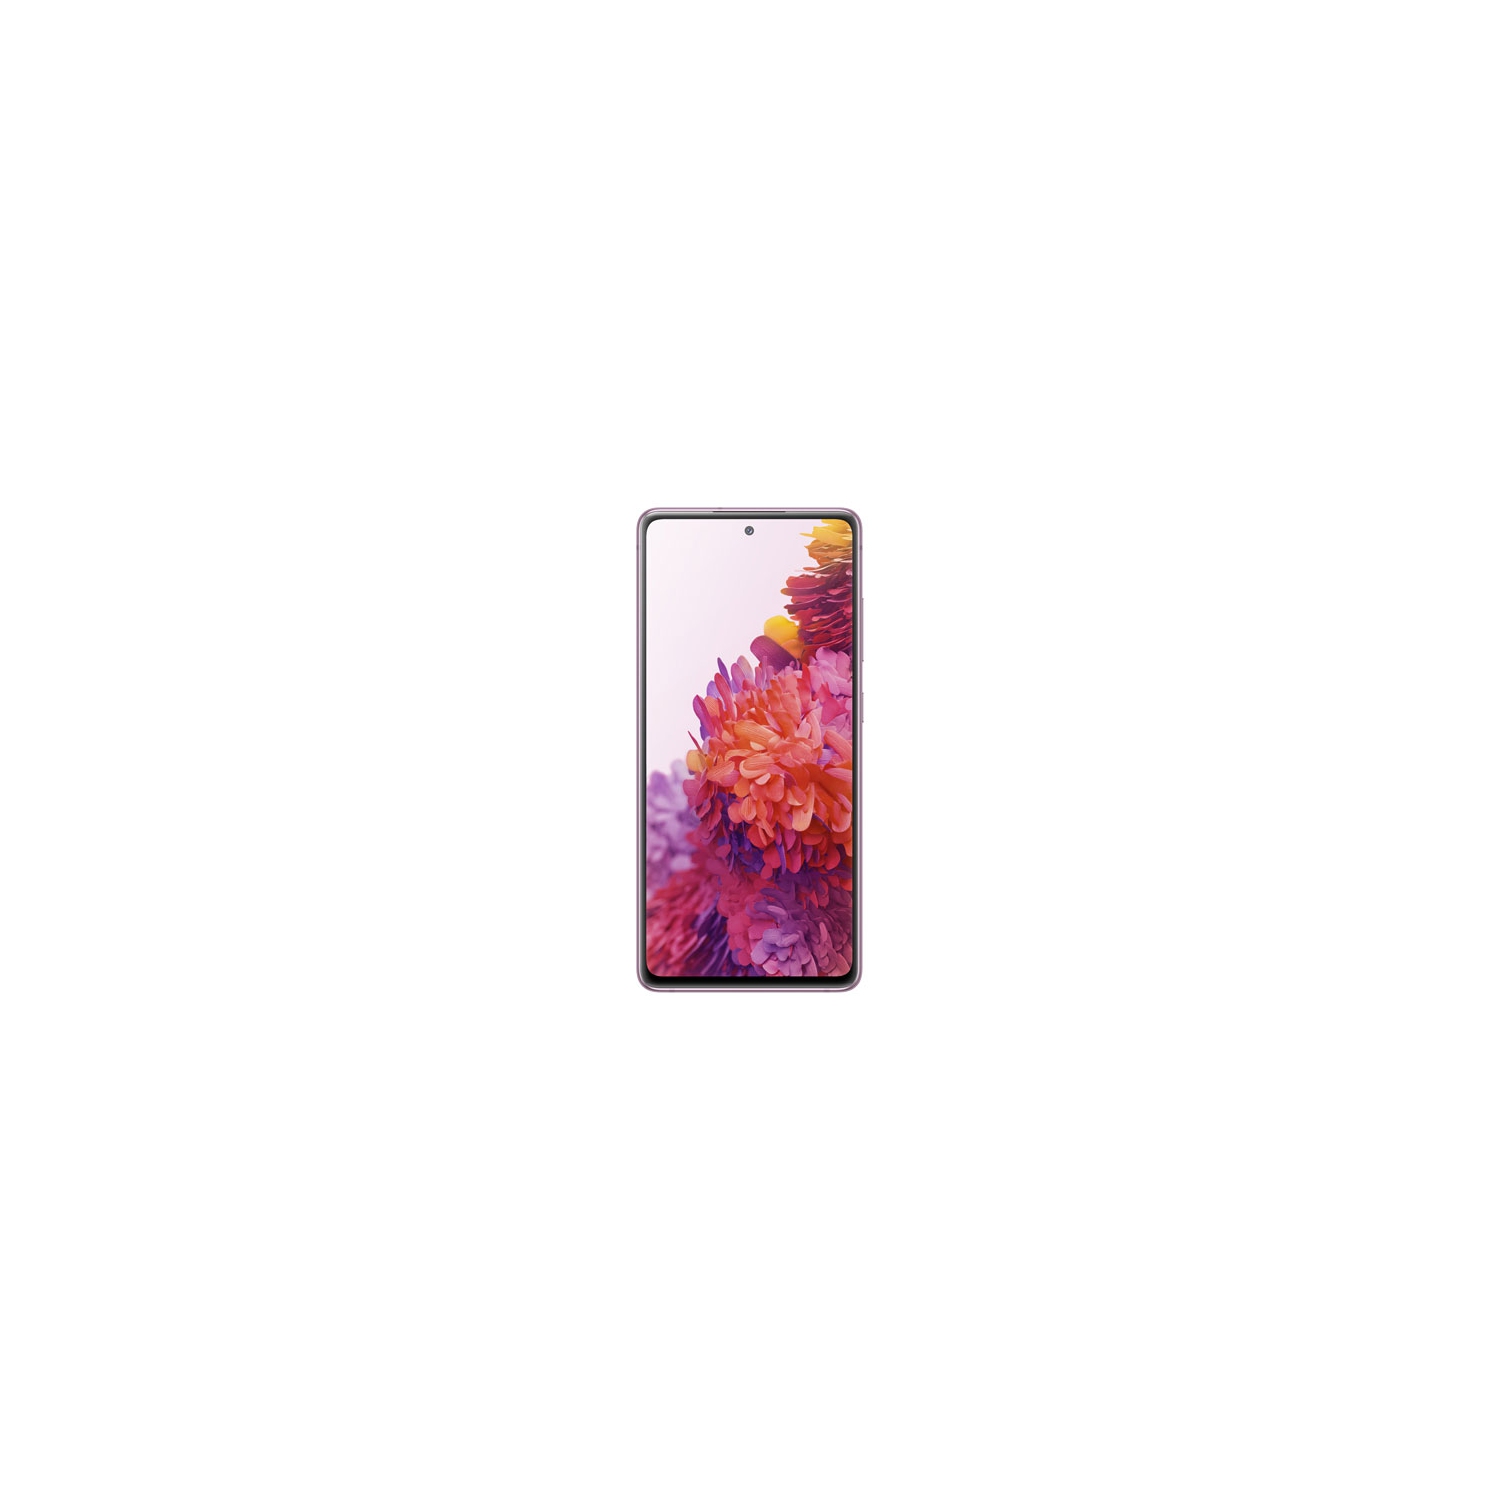 Samsung Galaxy S20 FE 128GB Smartphone - Cloud Lavender - Unlocked - Open Box